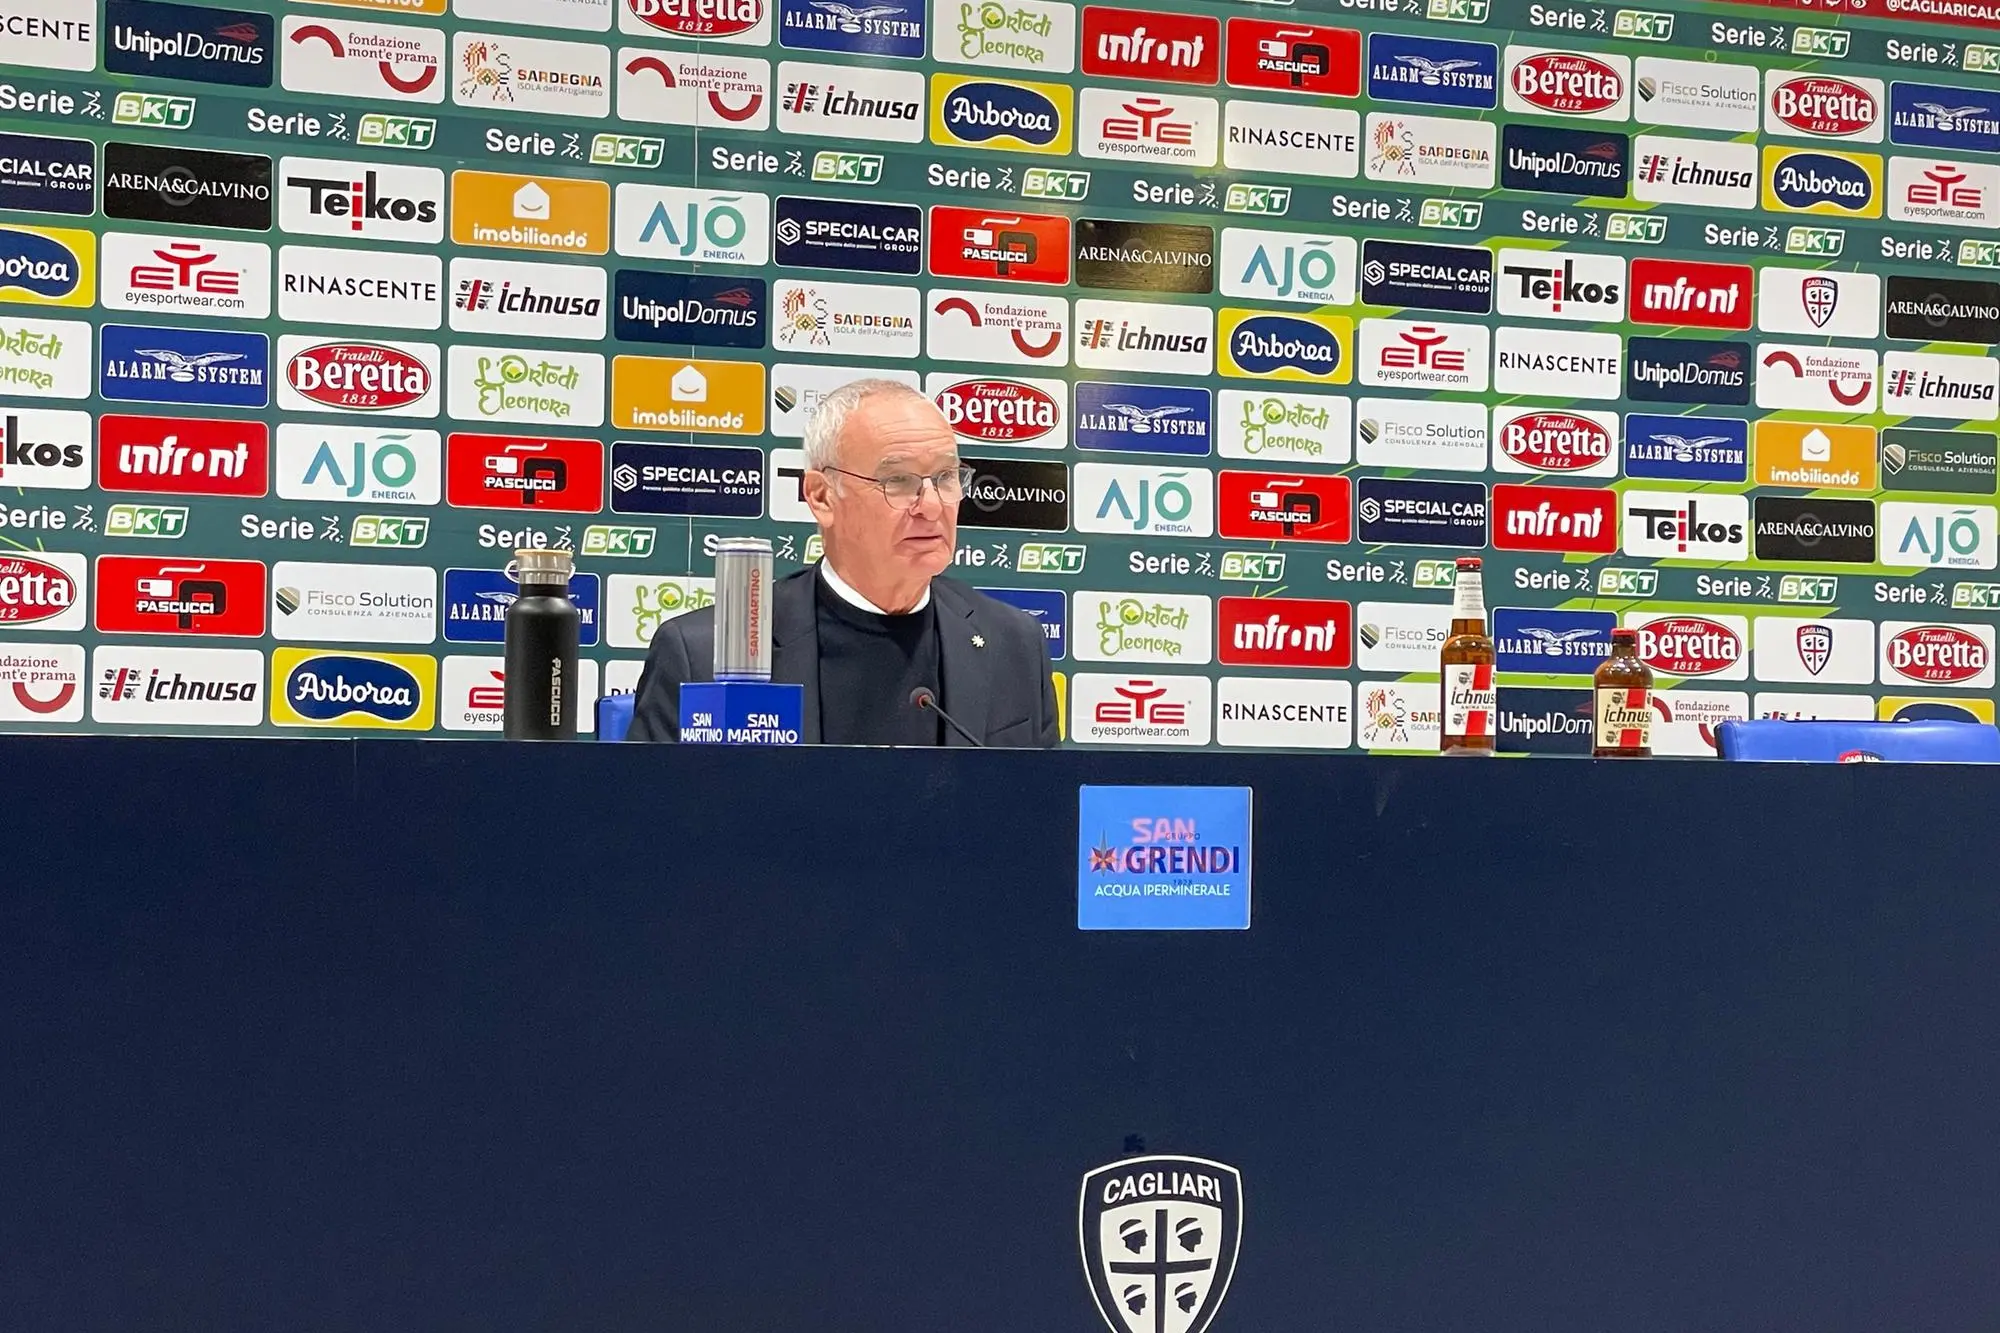 Claudio Ranieri in sala stampa all’Unipol Domus dopo Cagliari-Spal (foto Spignesi)